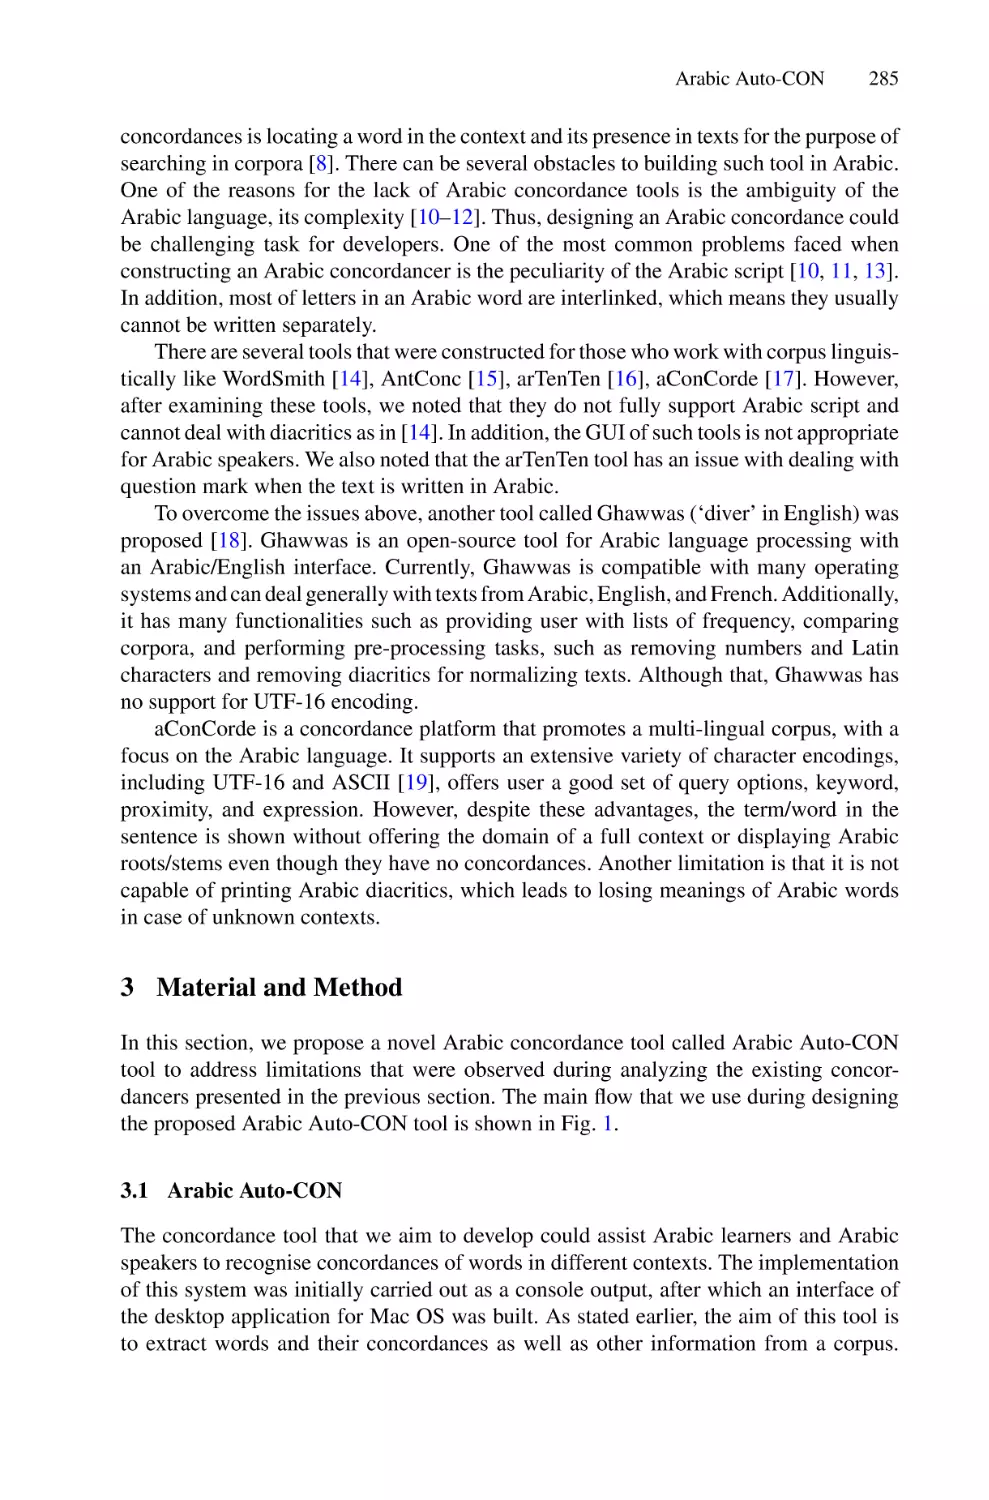 3 Material and Method
3.1 Arabic Auto-CON